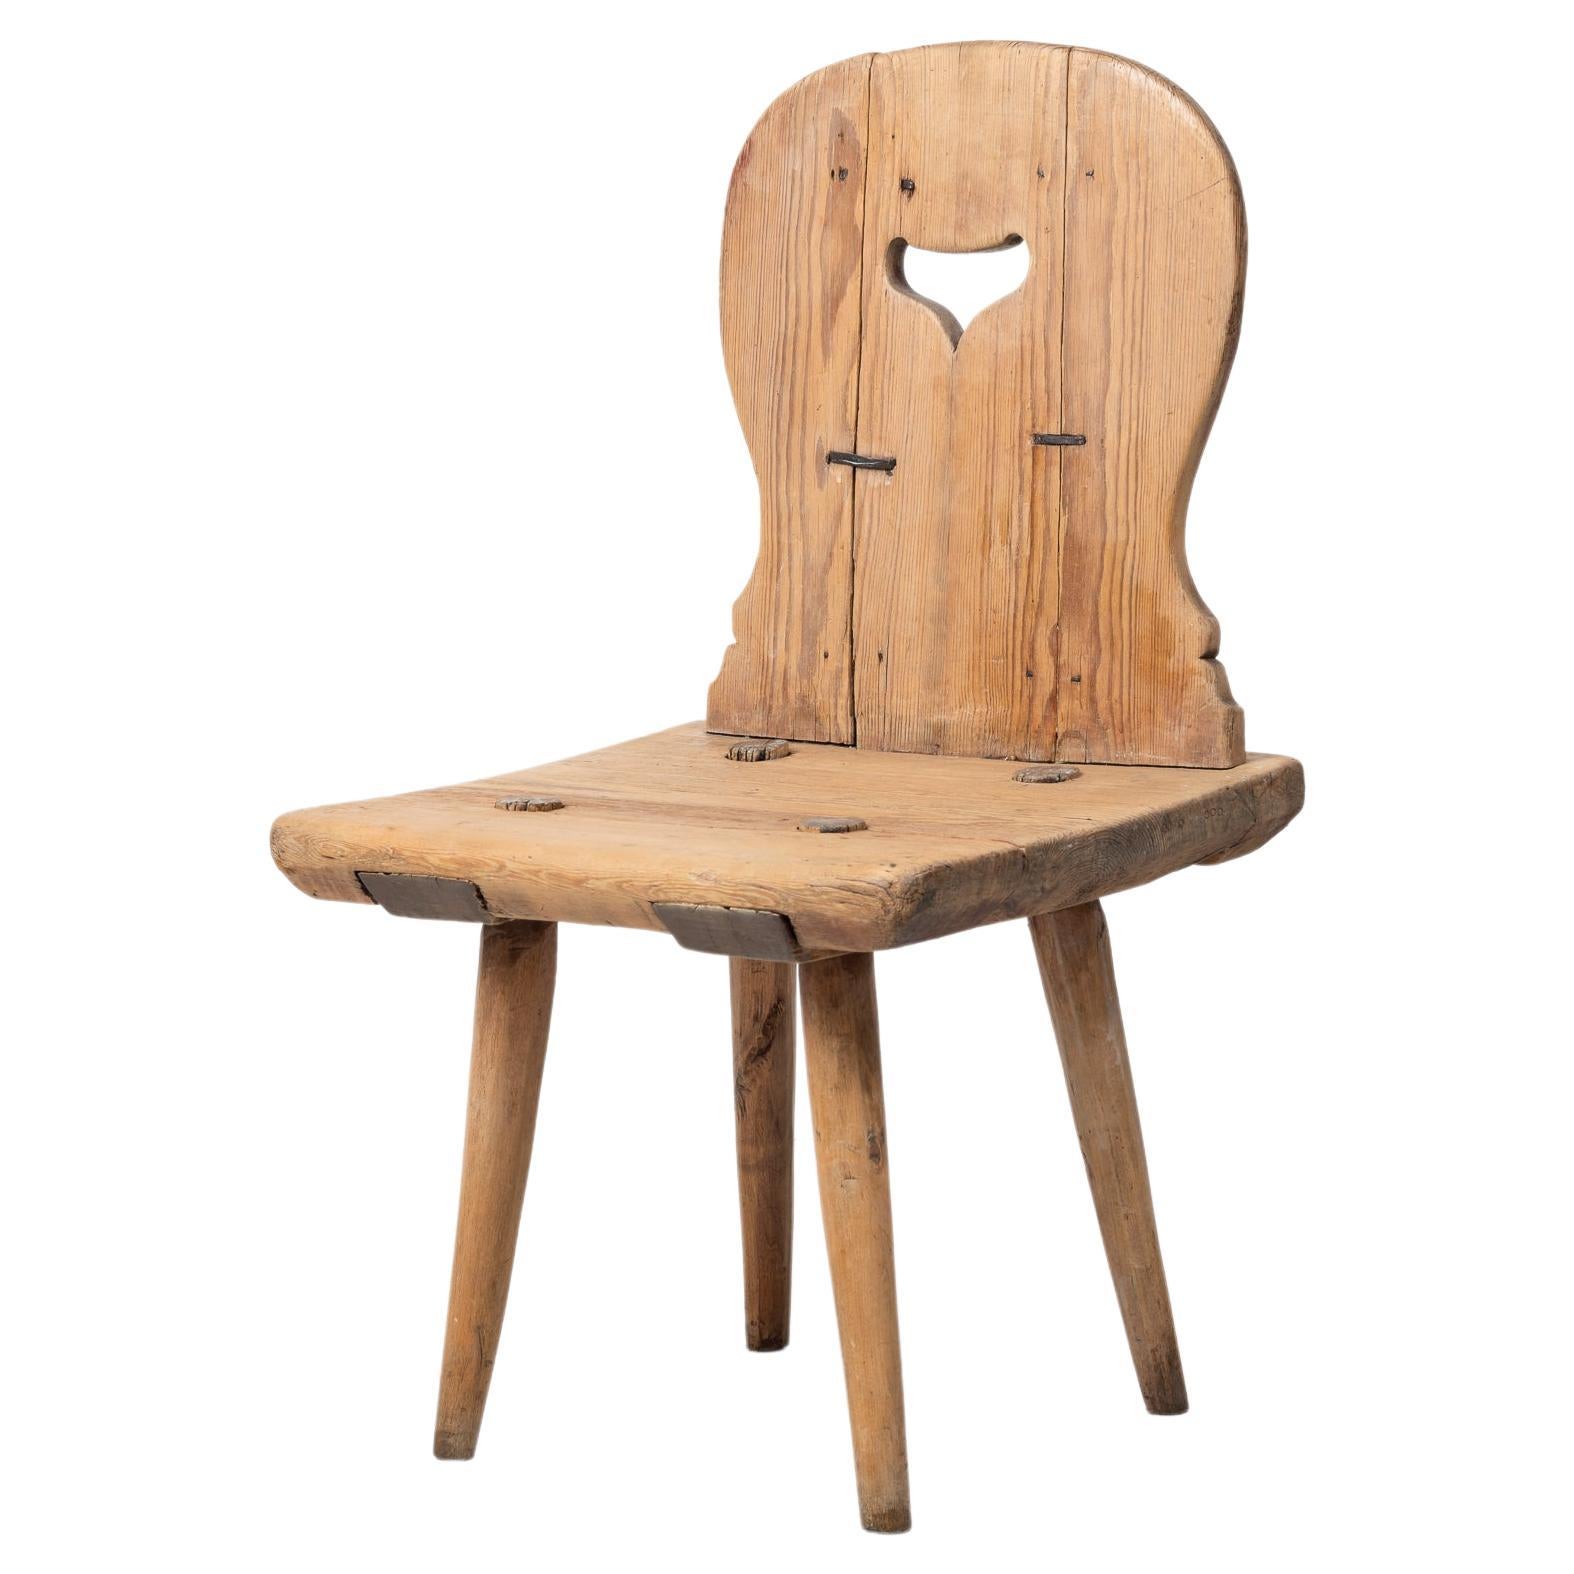 Swedish Rustic Folk Art Primitive Chair For Sale